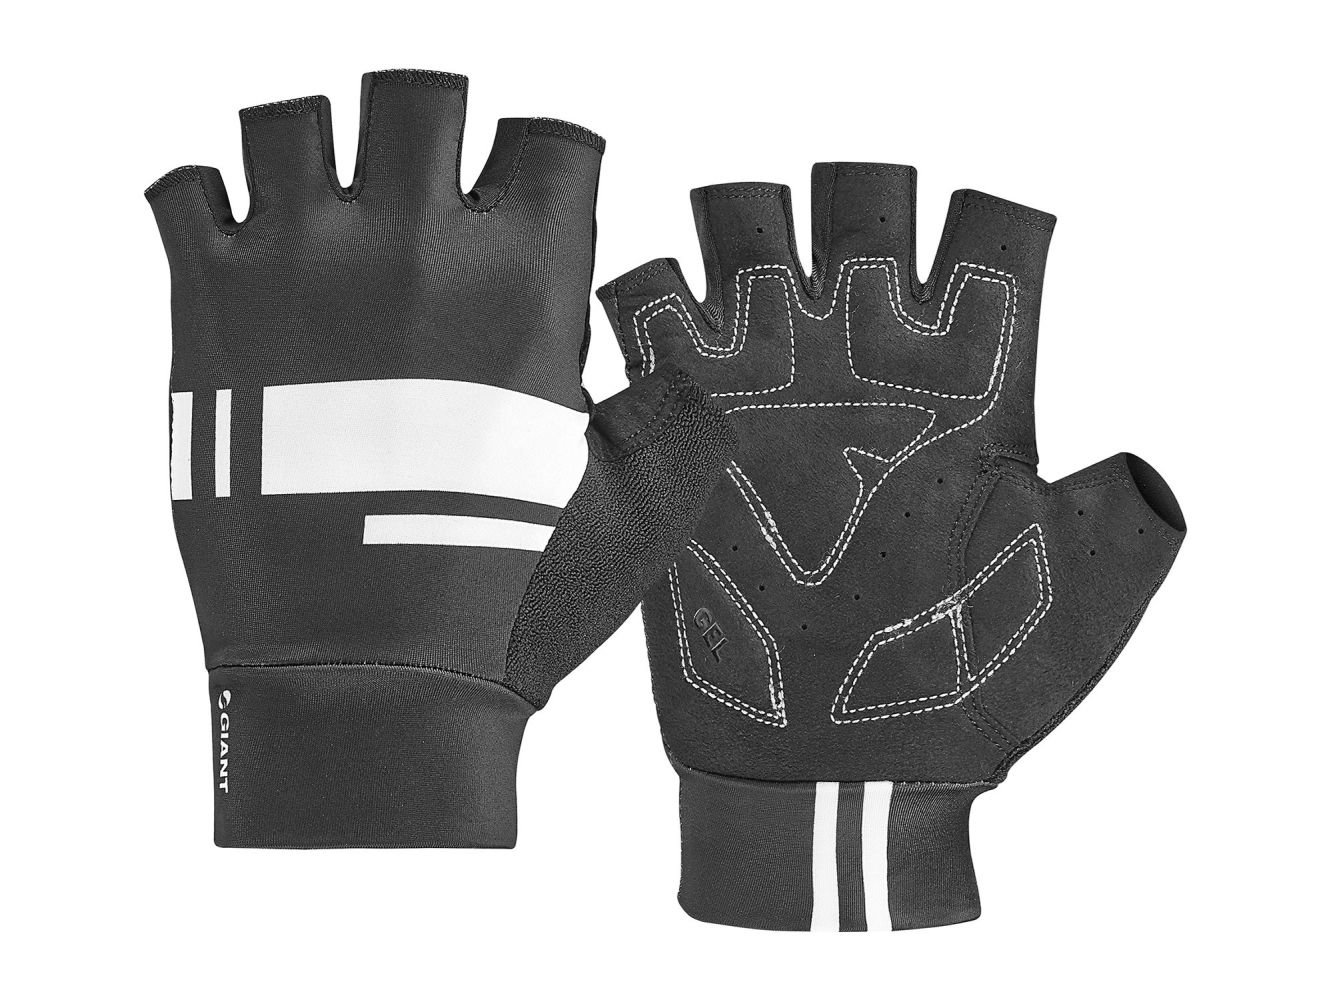 Details about   Giant Podium Gel Sf half Finger Bicycle Gloves Black/Grey 